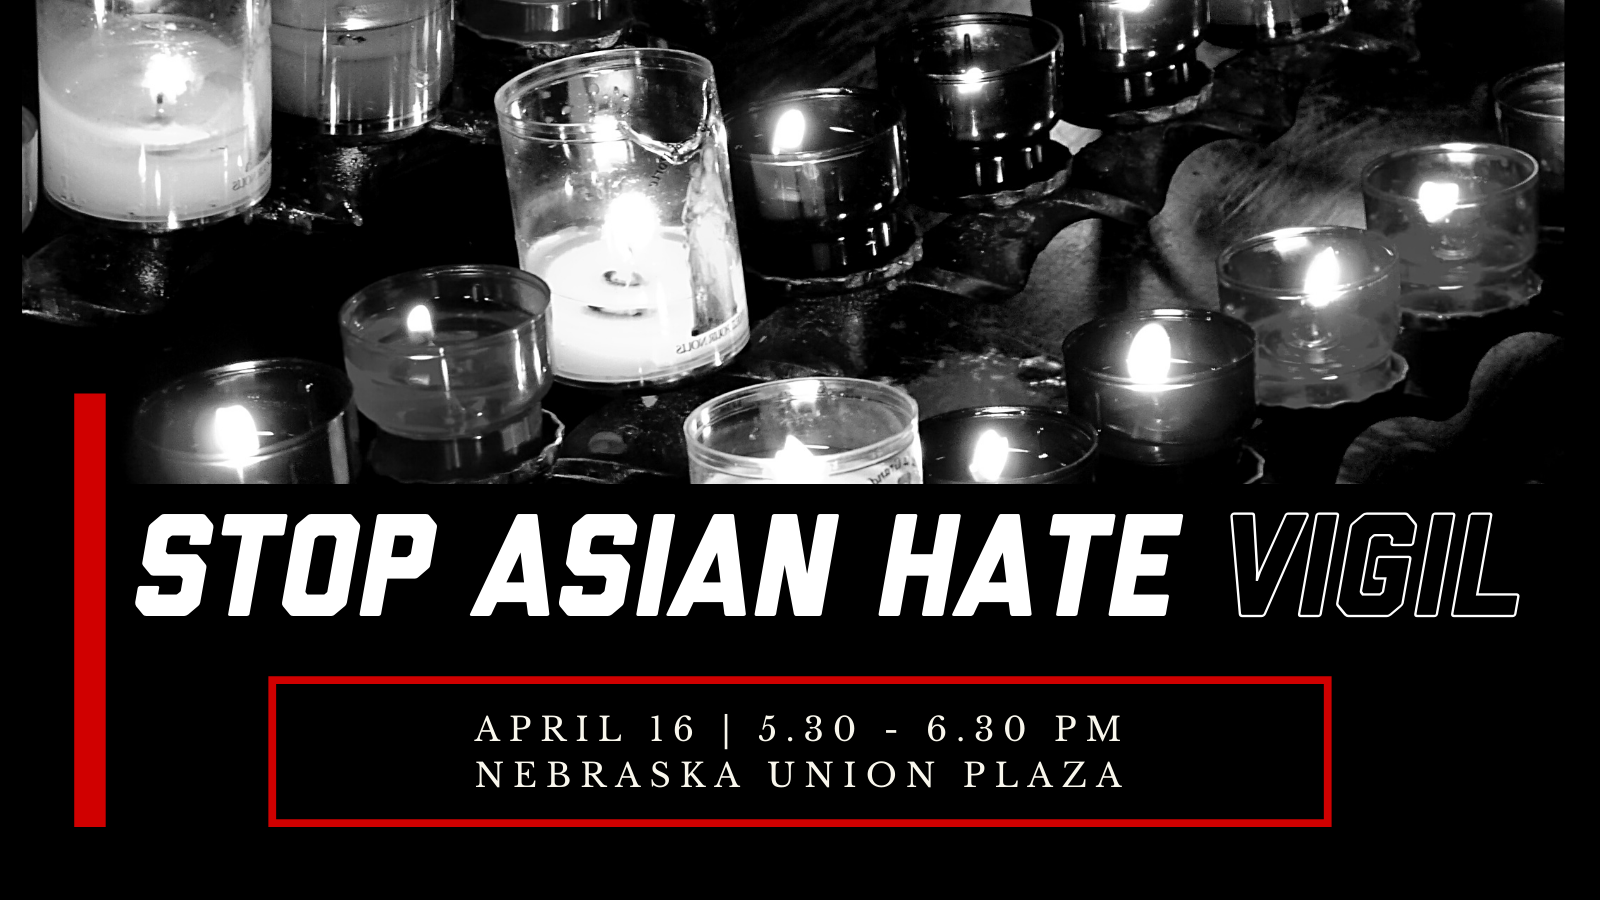 Stop Asian Hate Vigil, April 16 at 5.30 PM at Nebraska Union Plaza